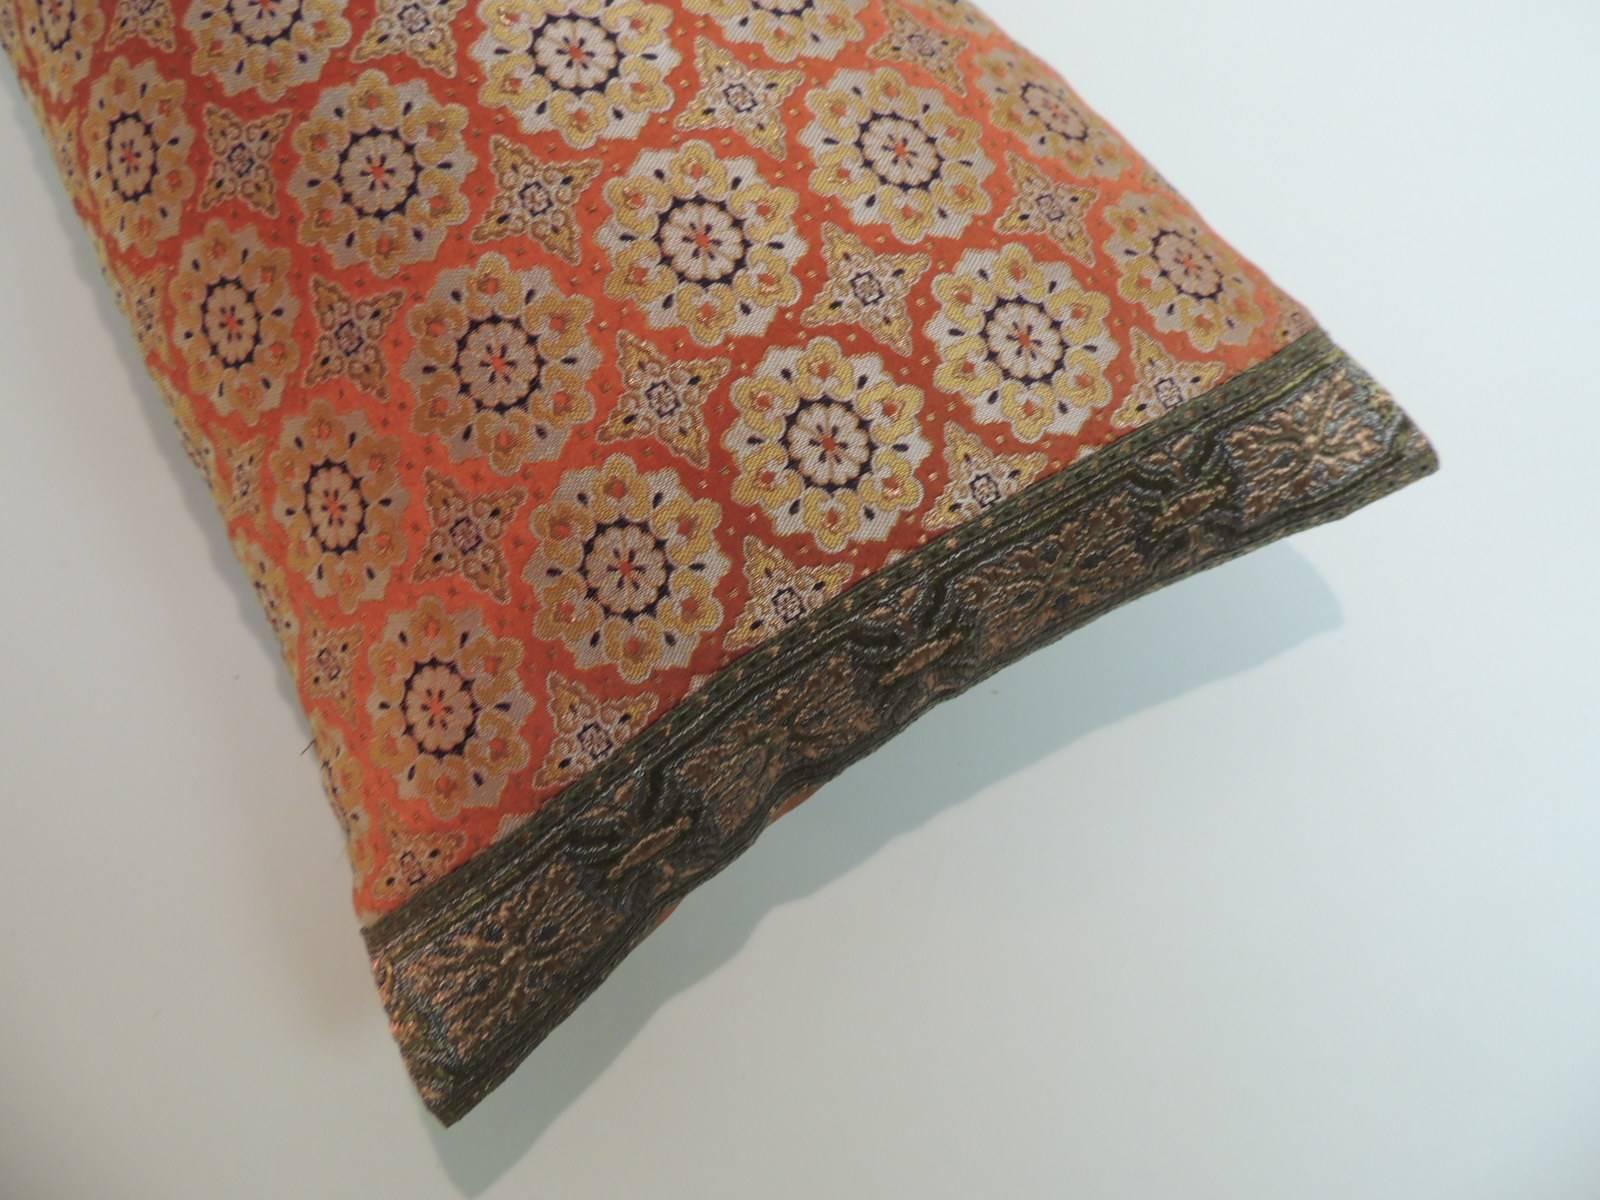 Japonisme Vintage Asian Obi Silk Woven Embroidery Bolster Decorative Pillow